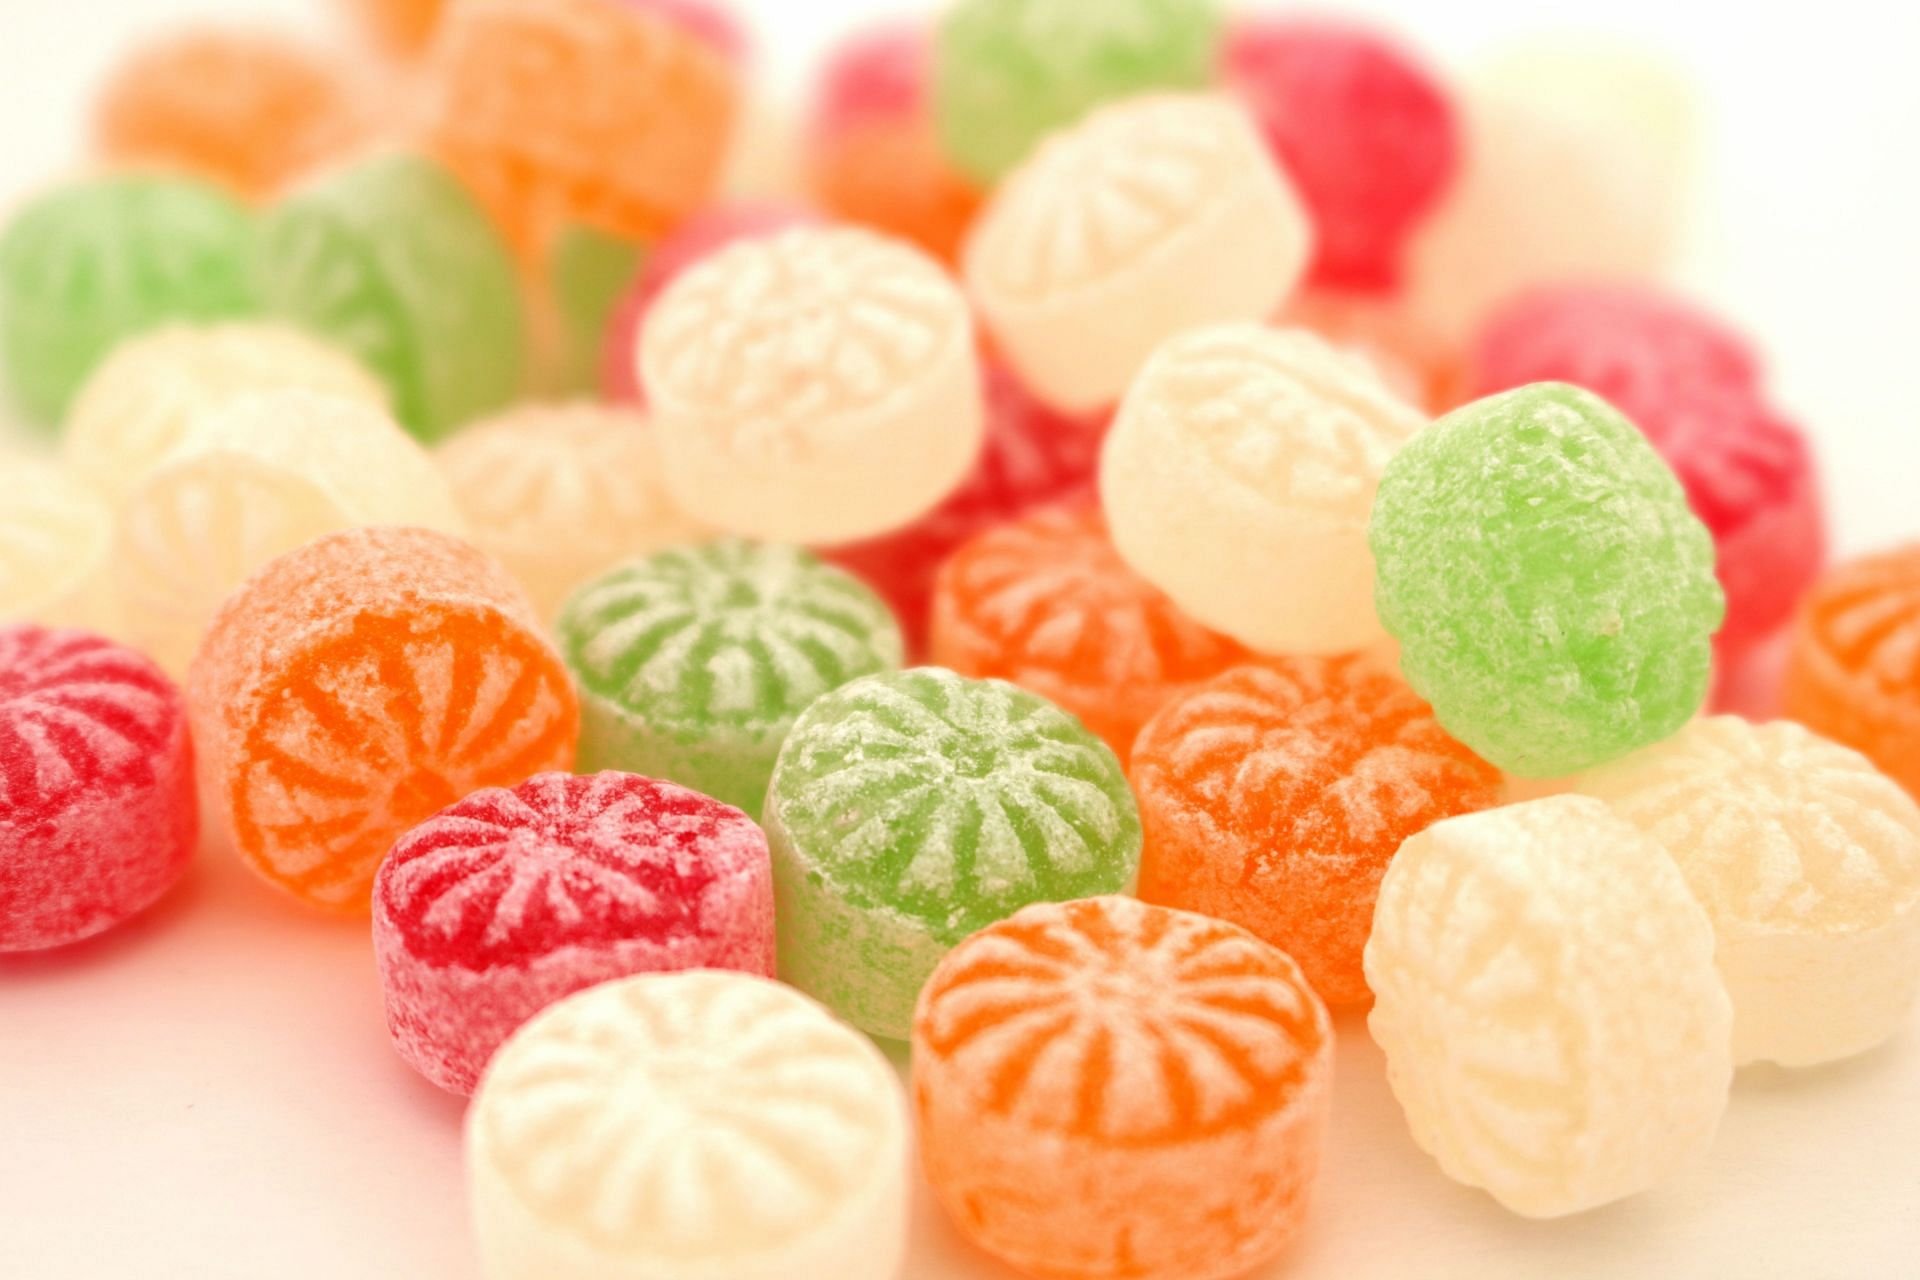 Having candies can cause severe dental issues. (Image via Unsplash/Customerbox)